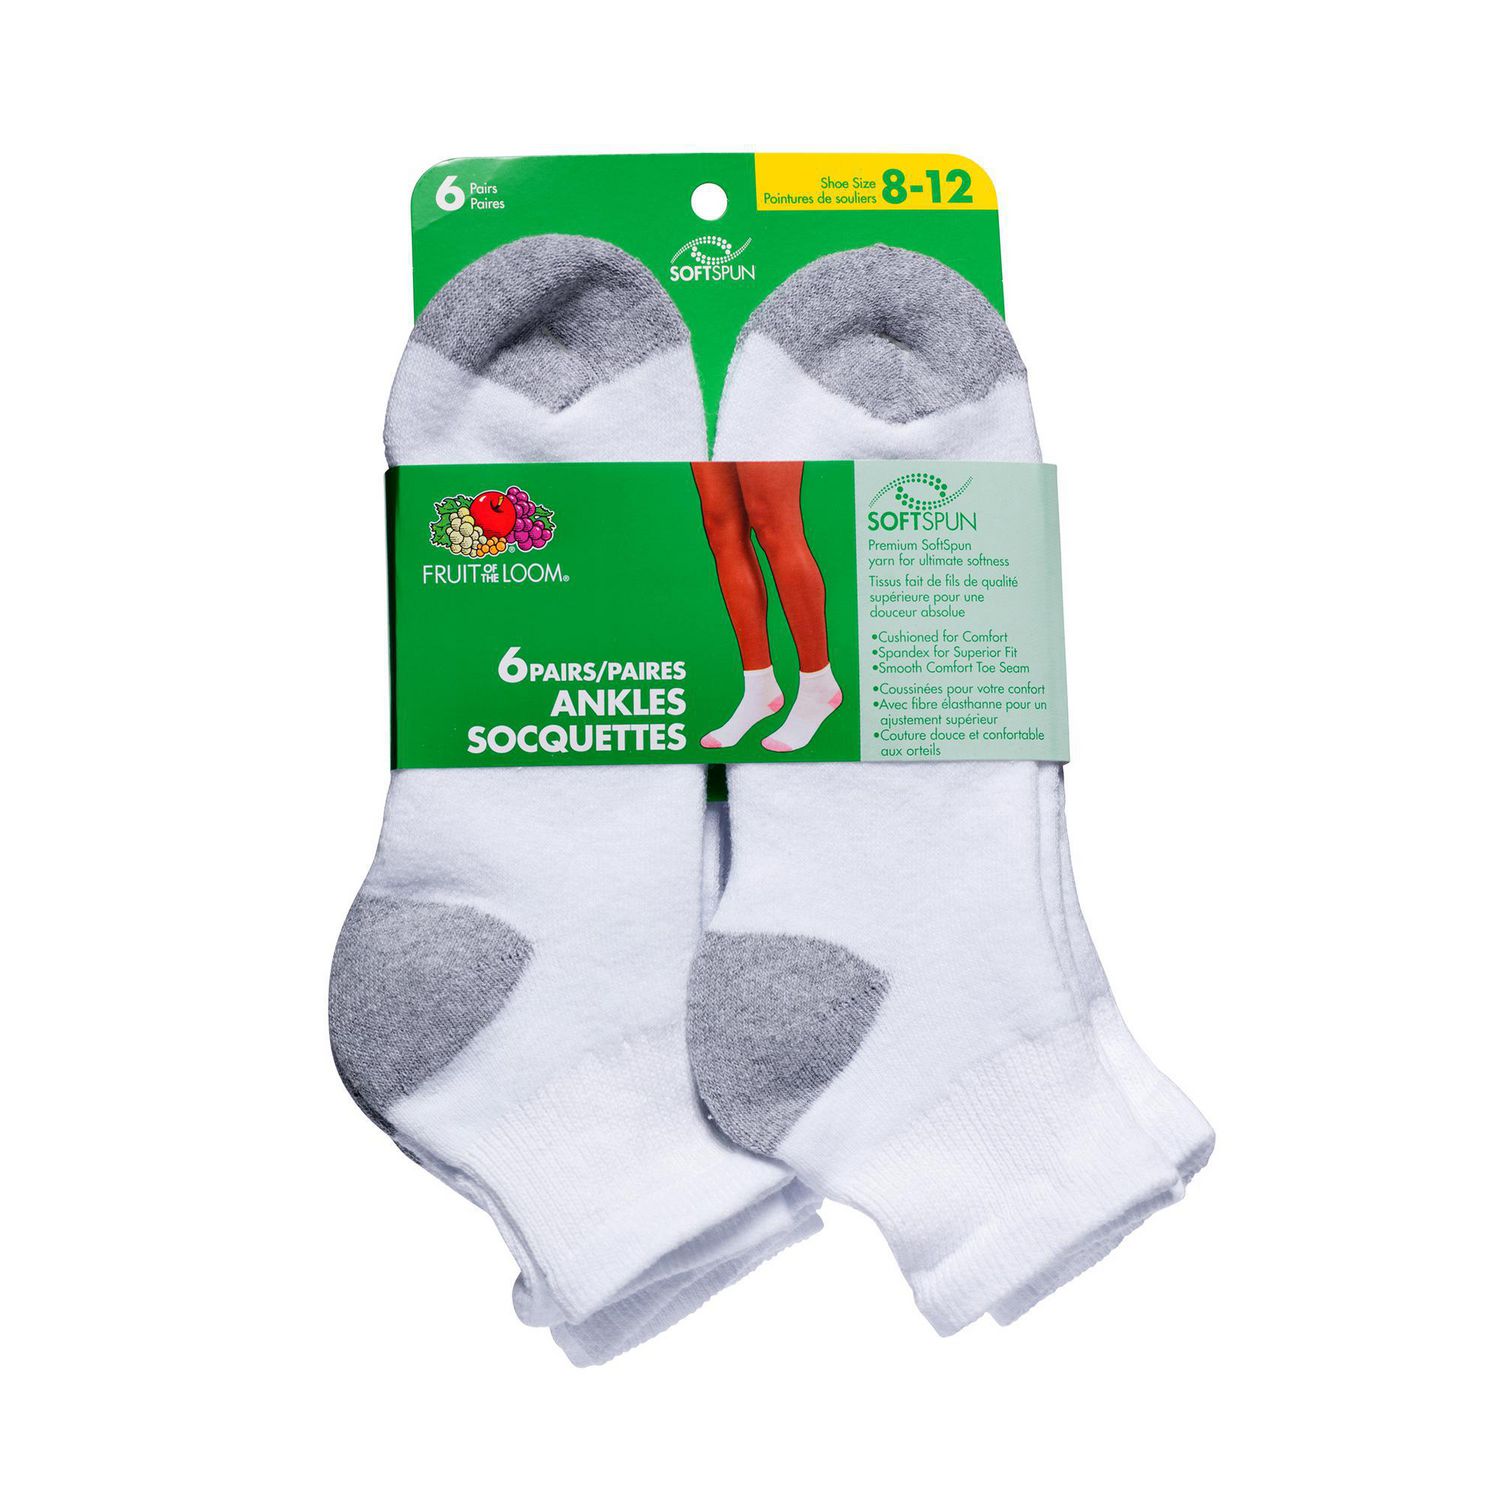 Fruit of the Loom Ladies Plus Size Ankle Socks - 6 Pairs | Walmart Canada